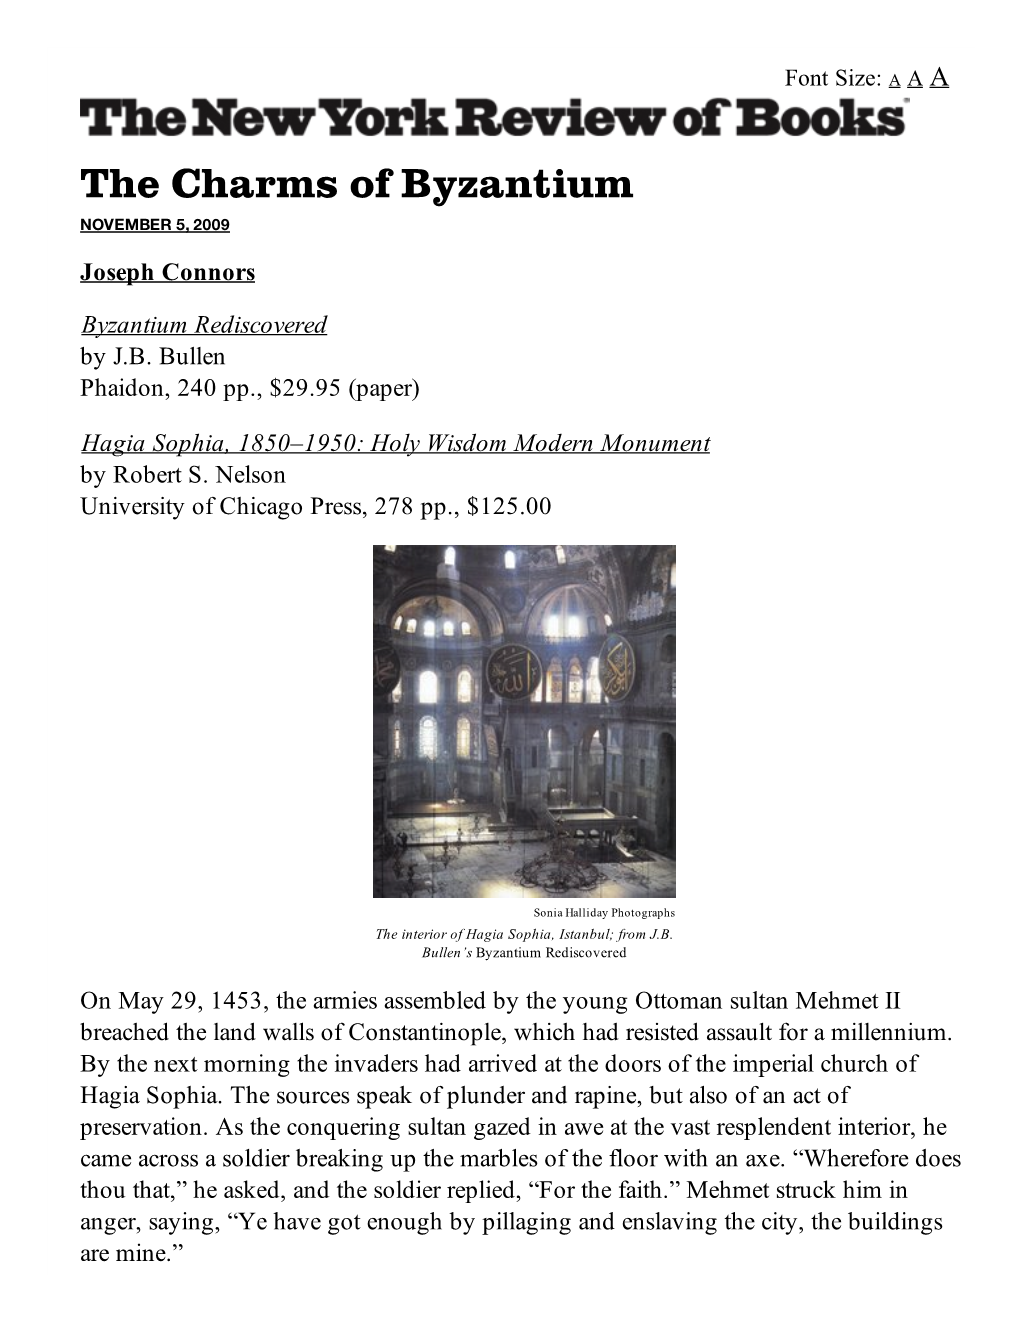 The Charms of Byzantium NOVEMBER 5, 2009